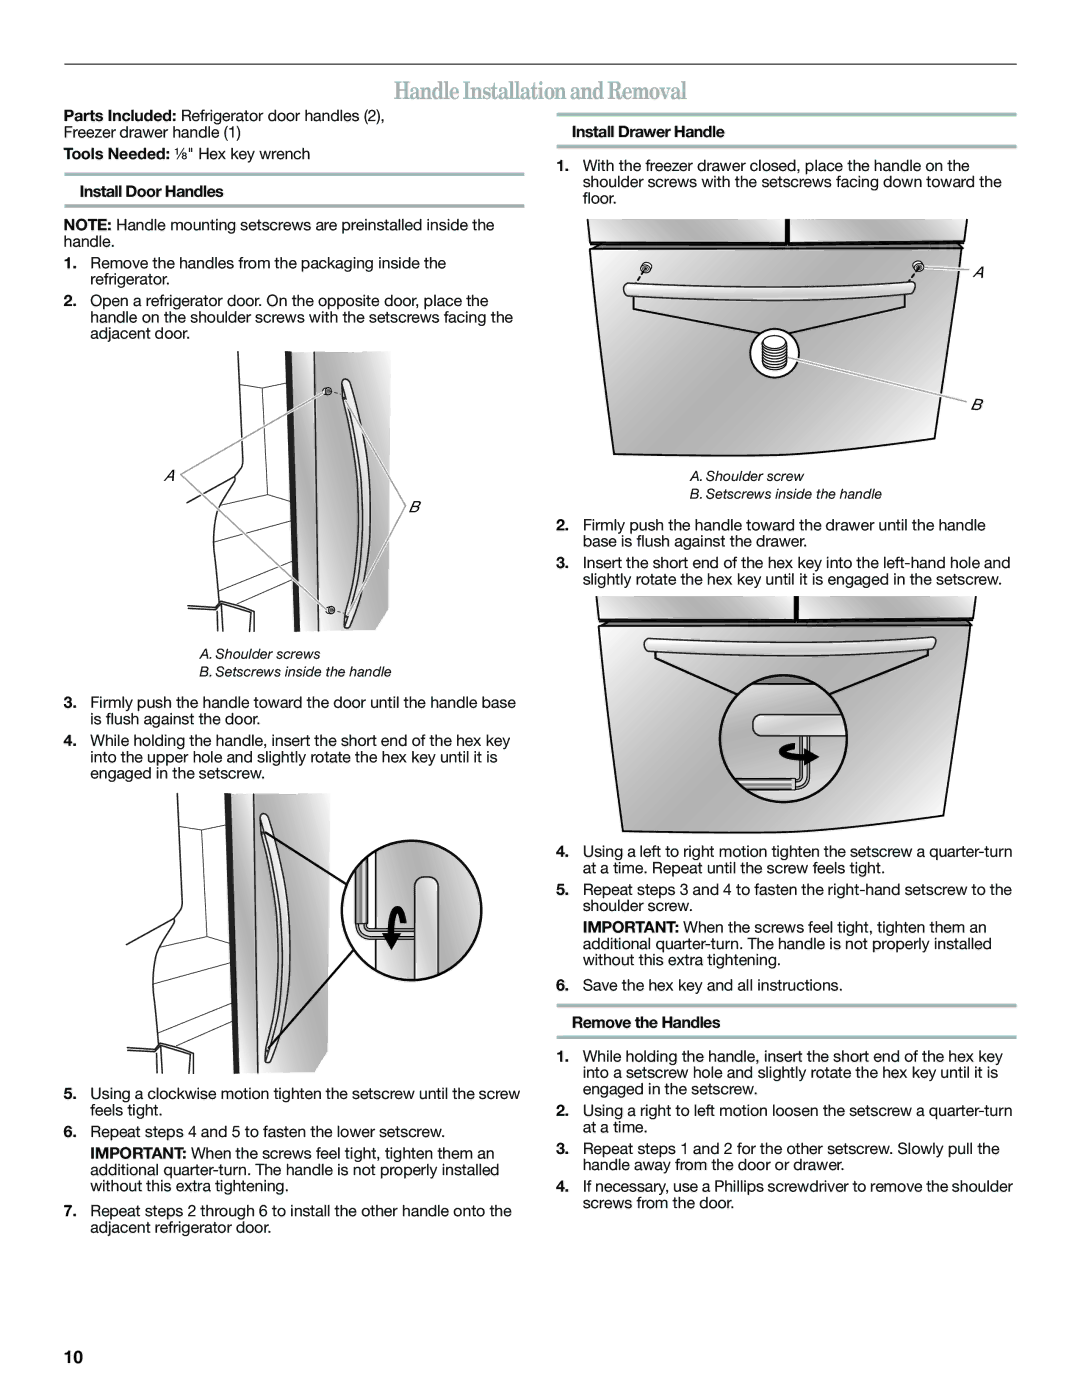 Whirlpool WRF560SEYW Handle Installation and Removal, Install Door Handles, Install Drawer Handle, Remove the Handles 